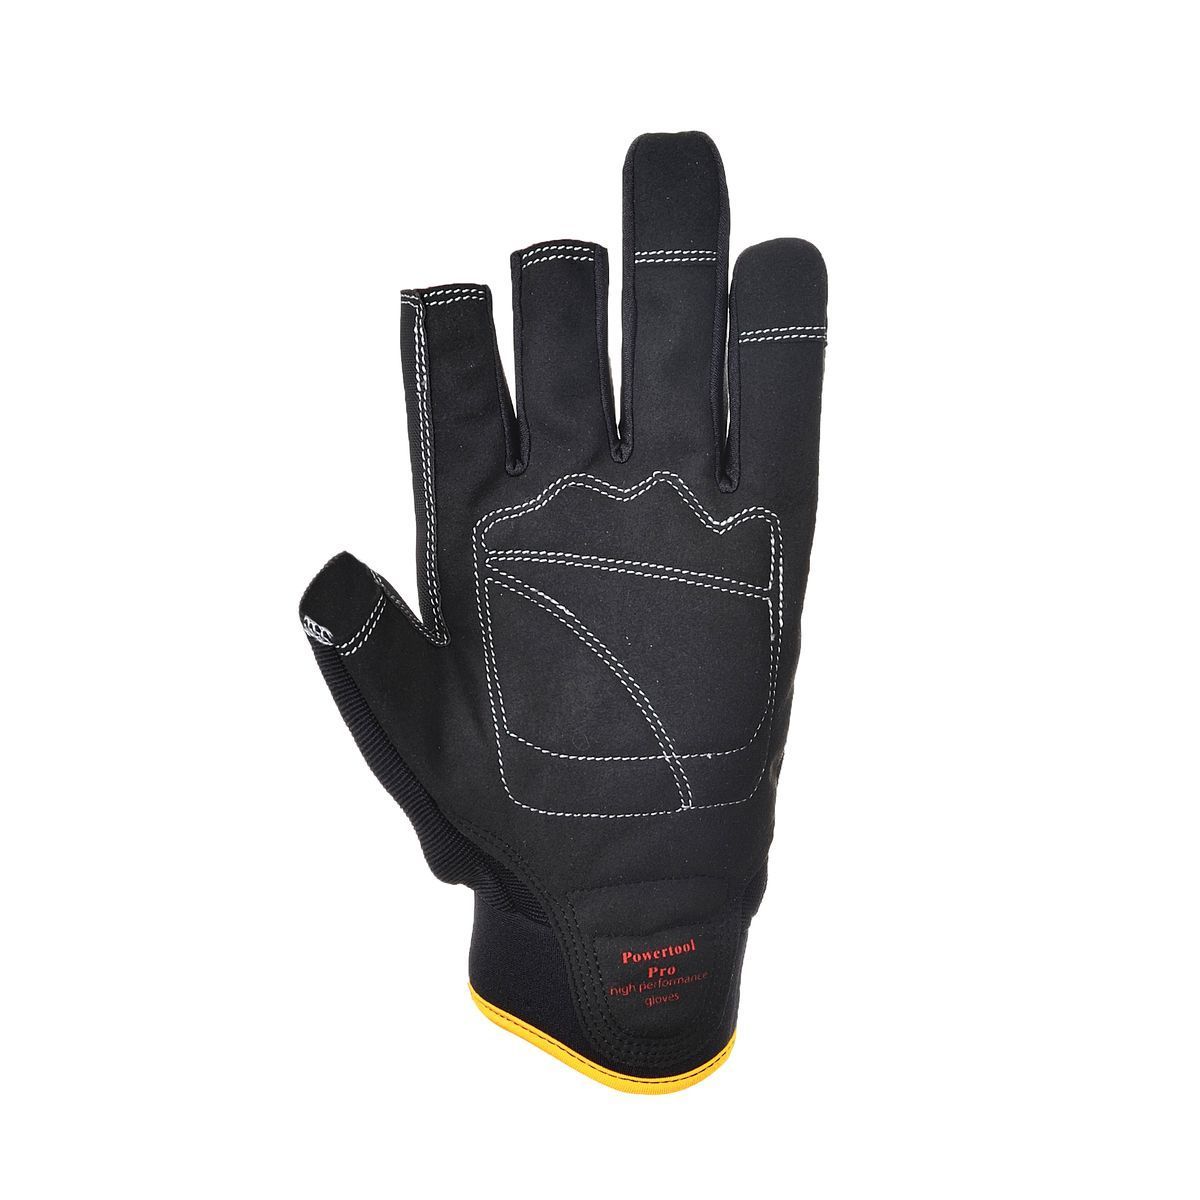 Style A740 Powertool Pro Glove-2